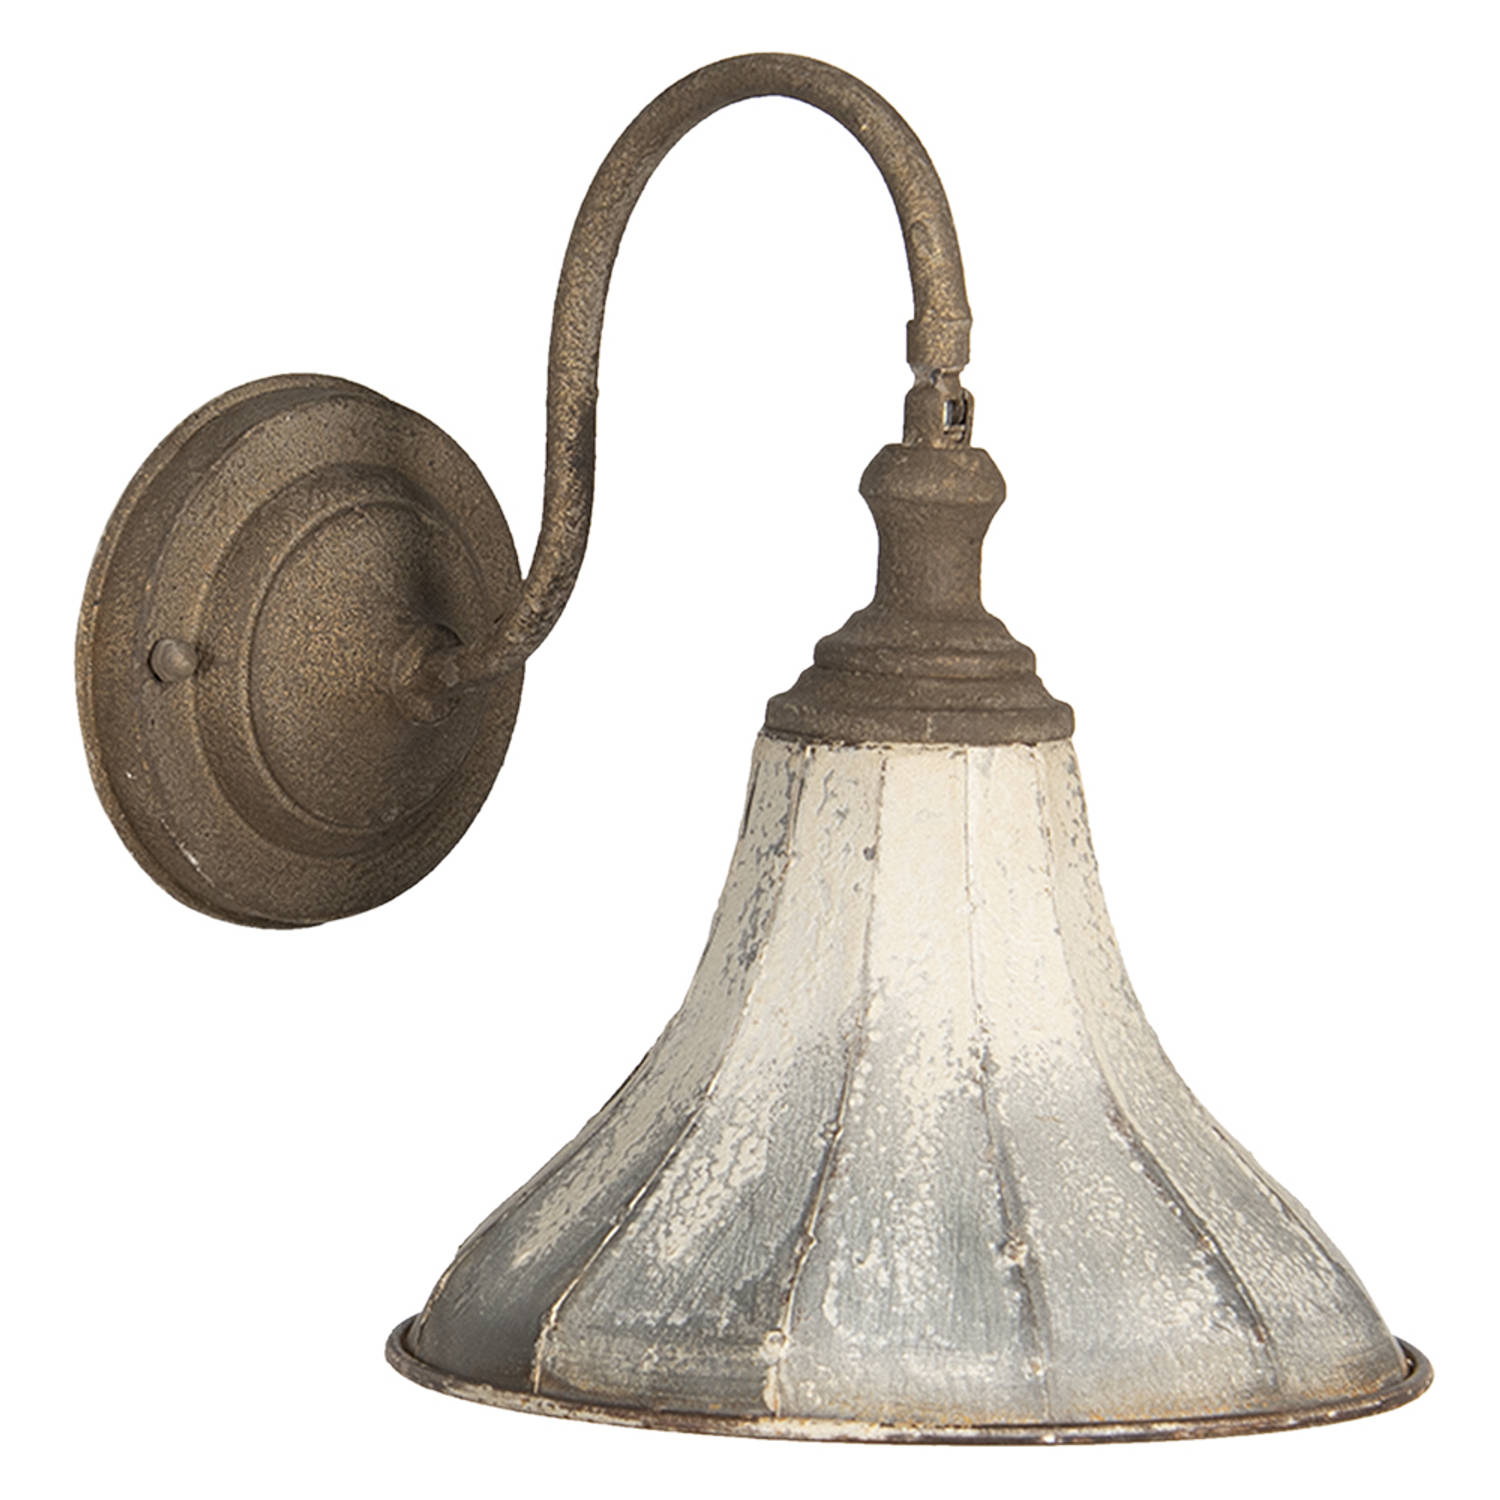 HAES DECO - Wandlamp - Shabby Chic - Vintage / Retro Lamp, formaat 31x23x27 cm - Bruin / Wit Metaal - Muurlamp, Sfeerlamp